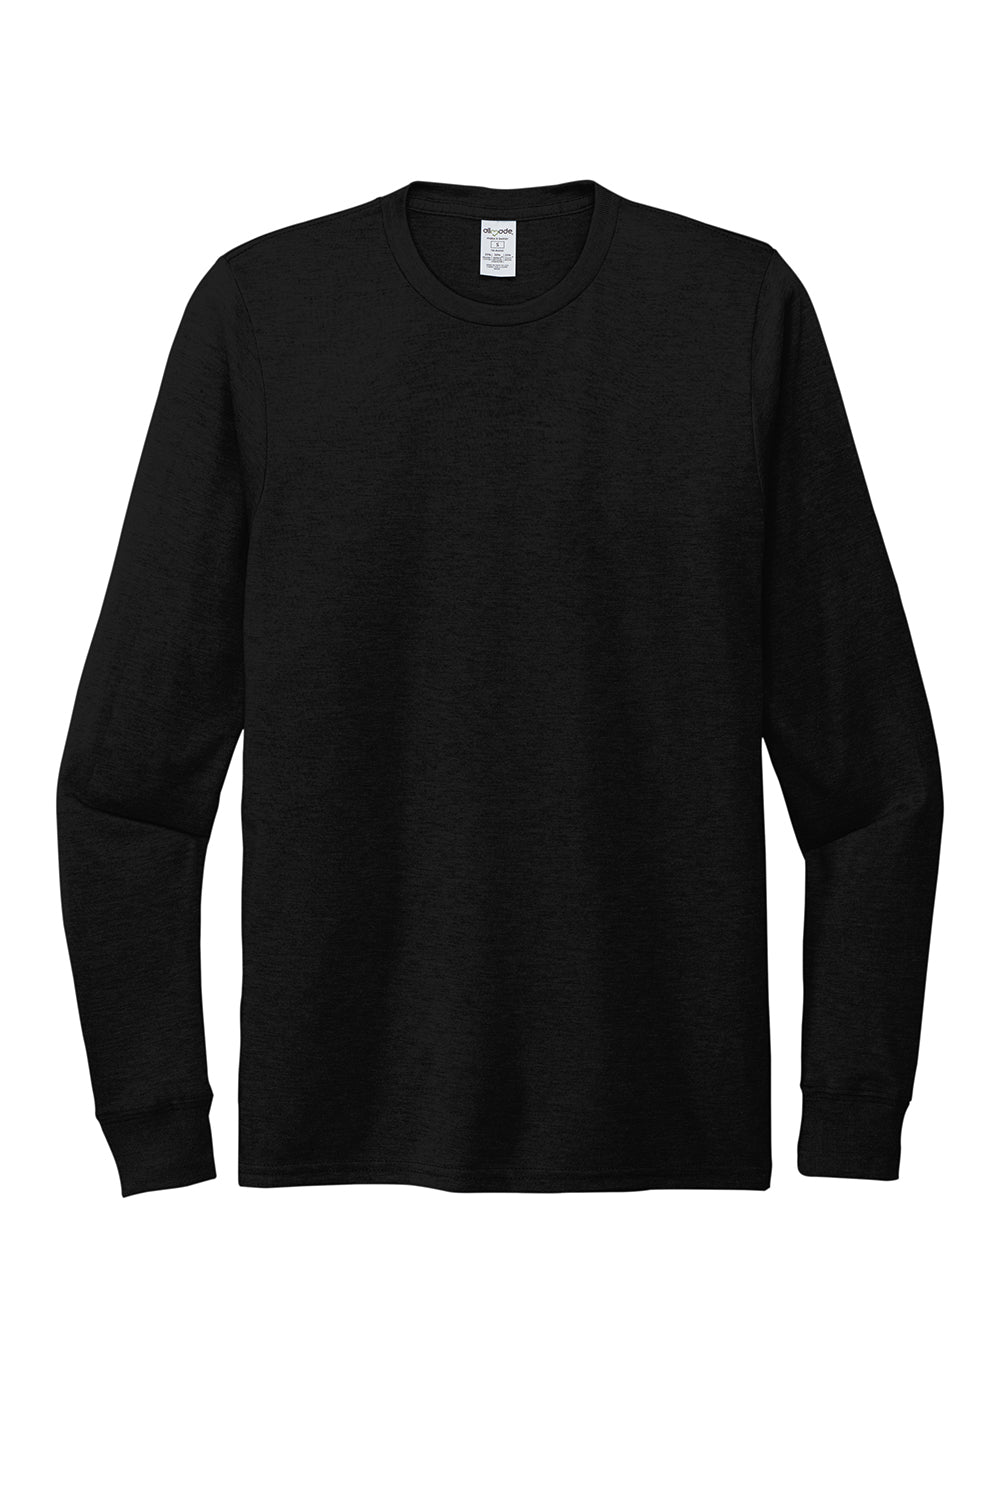 Allmade AL6004 Mens Long Sleeve Crewneck T-Shirt Deep Black Flat Front